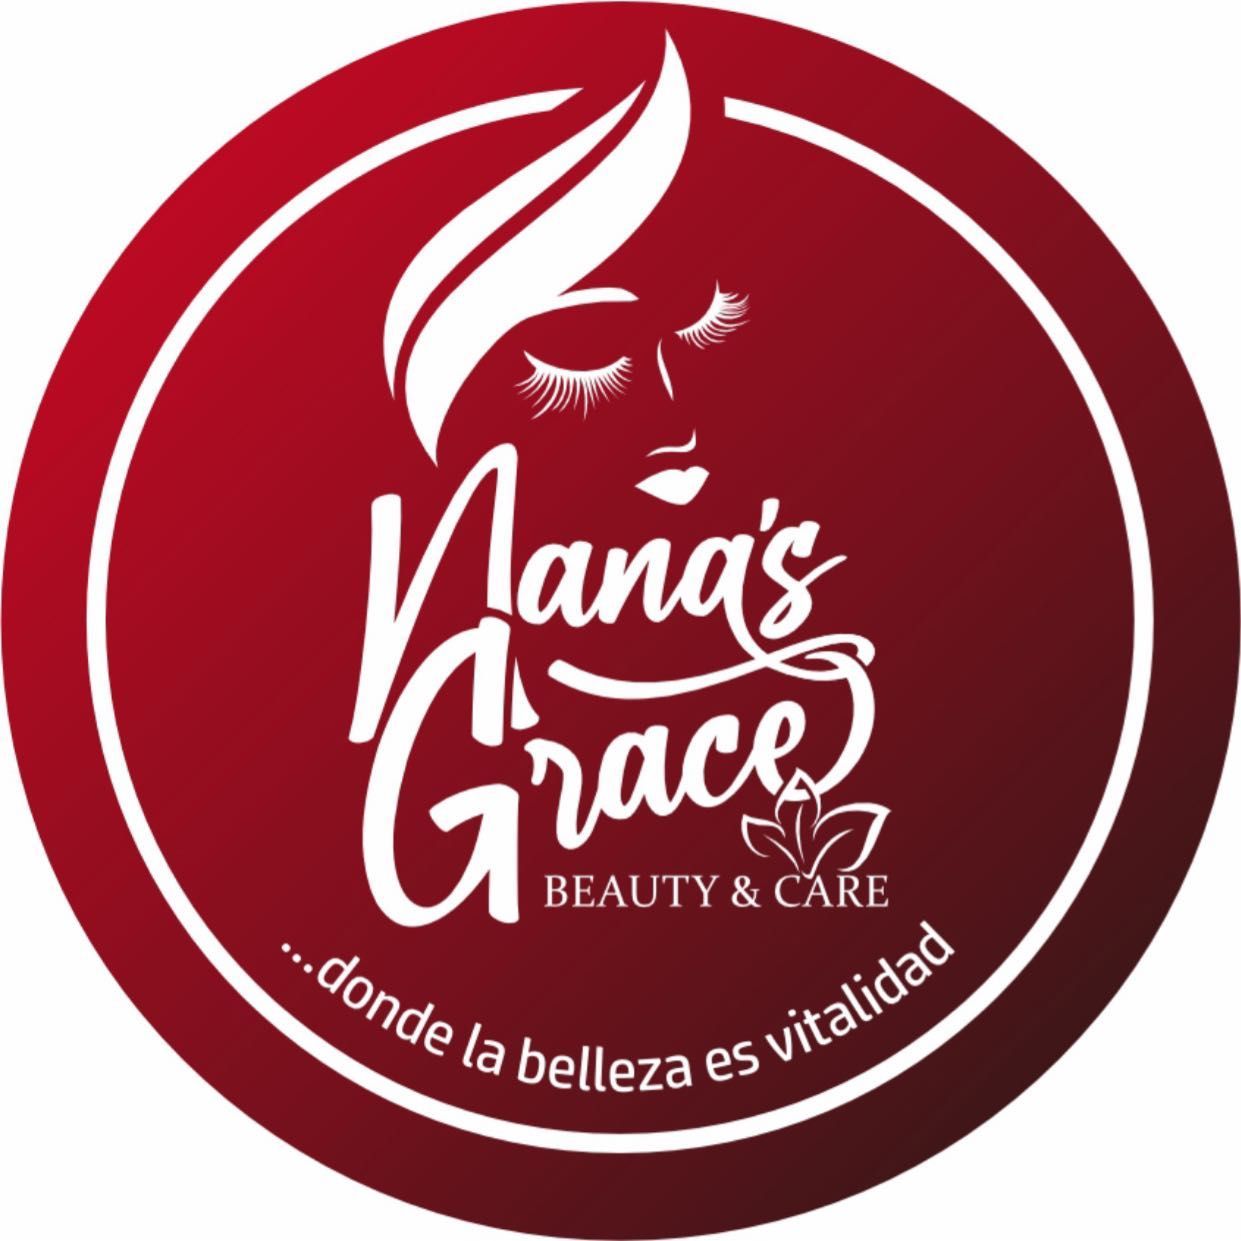 Nana’s Grace, 4008 fiesta plaza, Tampa, 33607